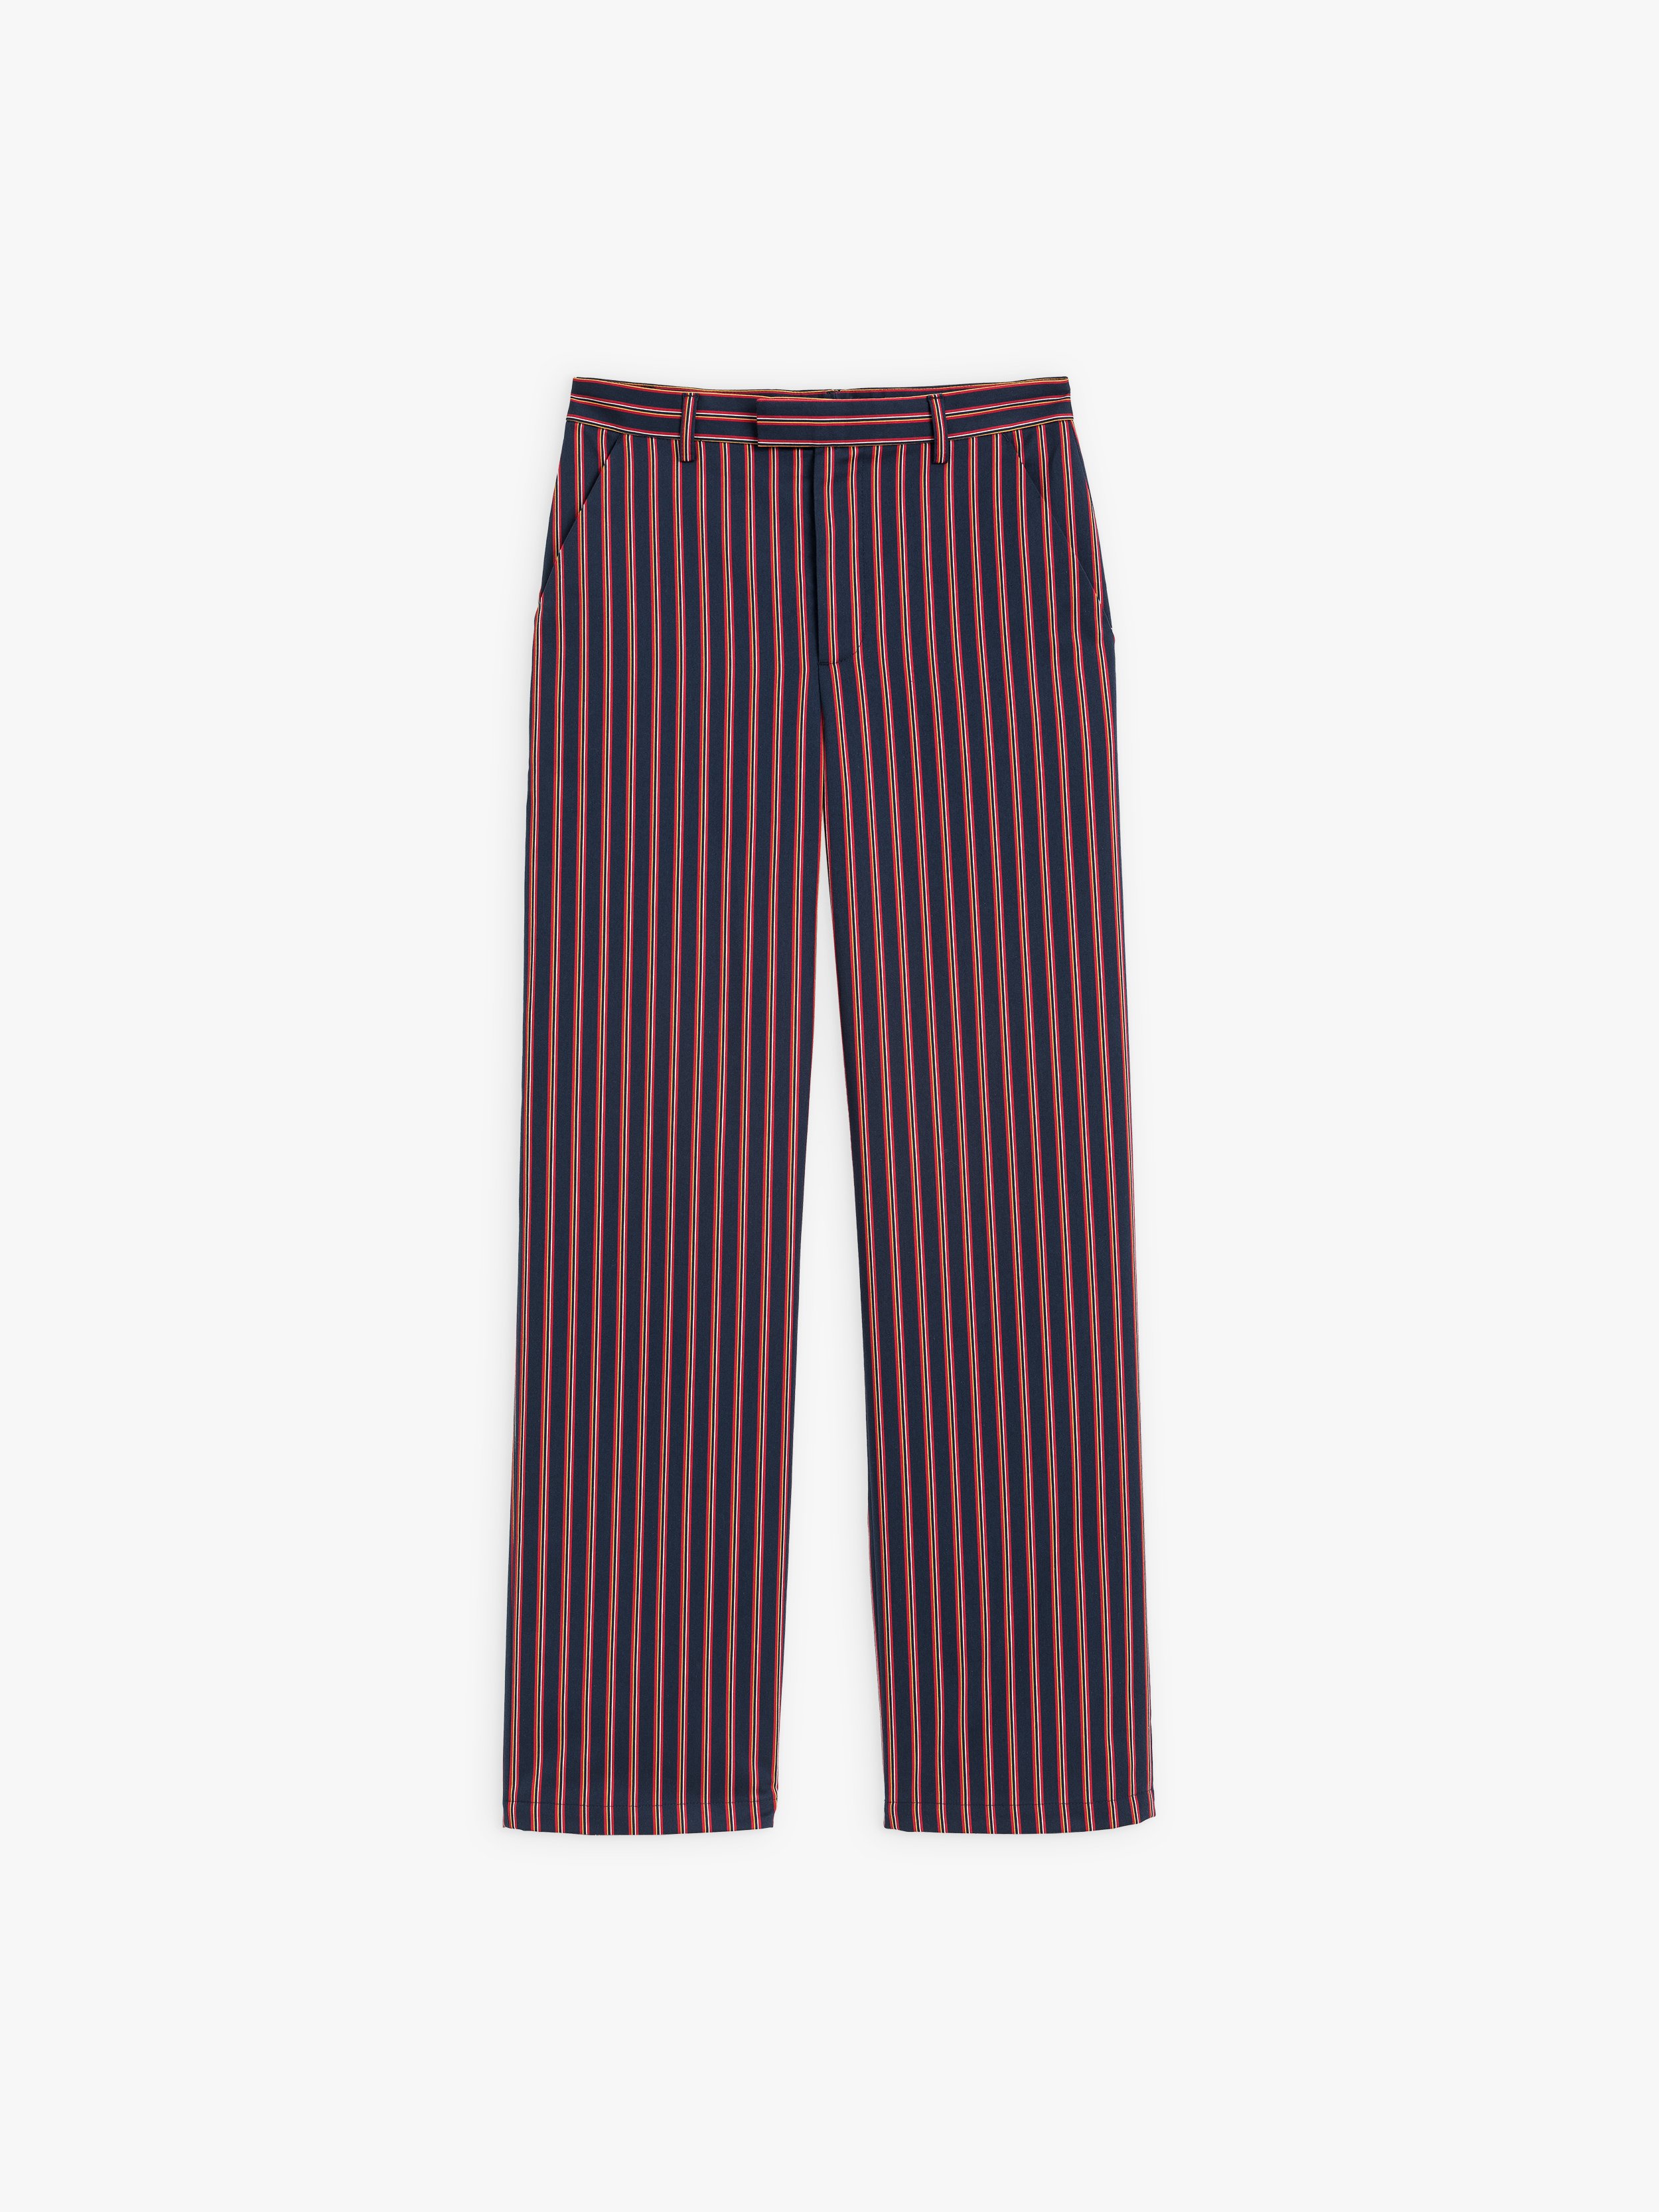 dark blue striped pants